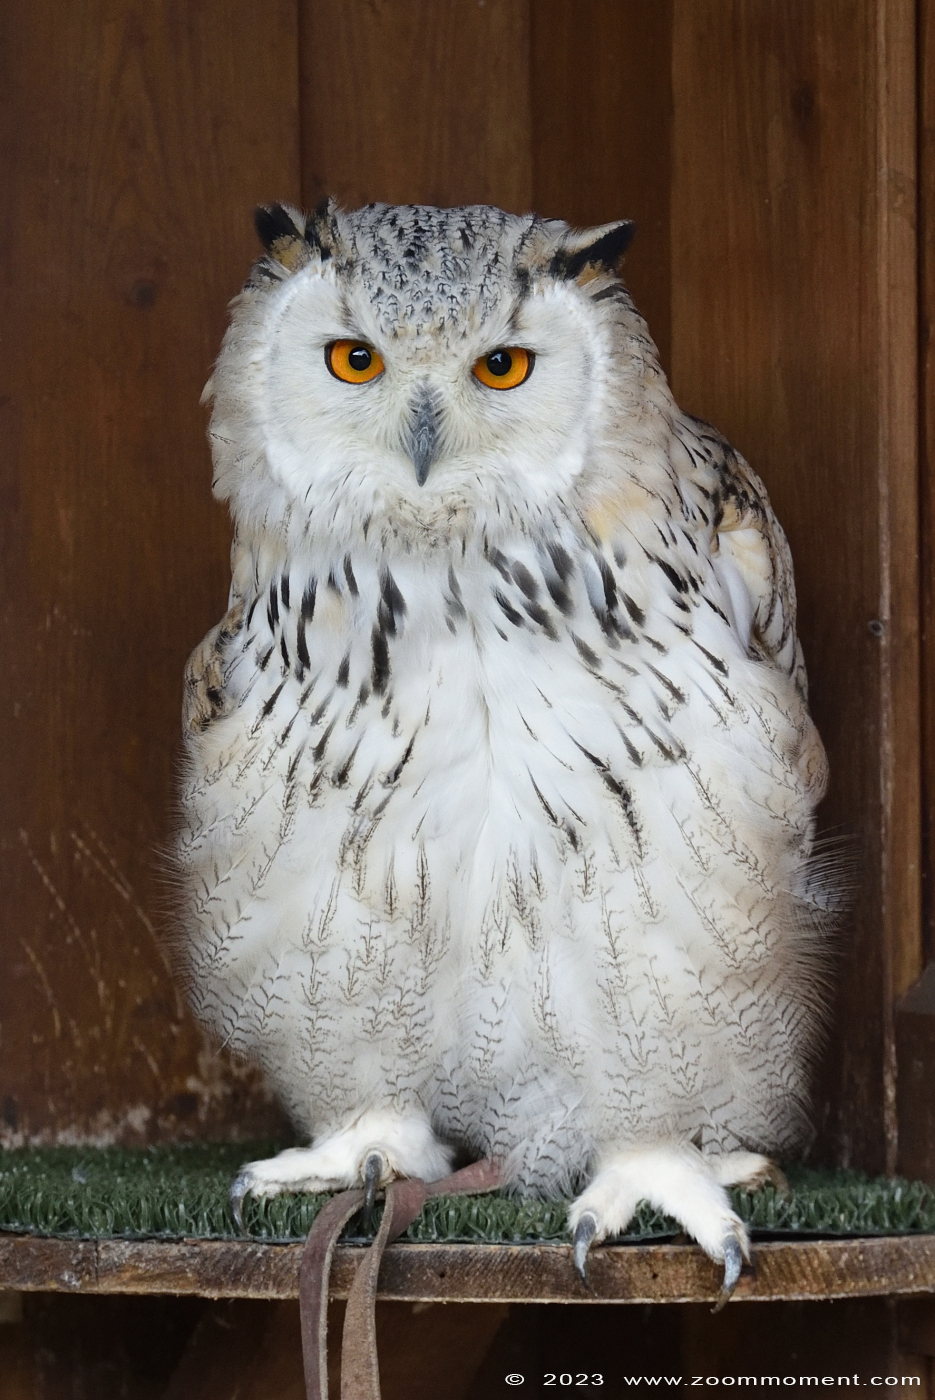 Siberische oehoe ( Bubo bubo sibiricus ) western Siberian eagle-owl
Trefwoorden: Neunkircher Zoo Germany Siberische oehoe Bubo bubo sibiricus western Siberian eagle-owl owl